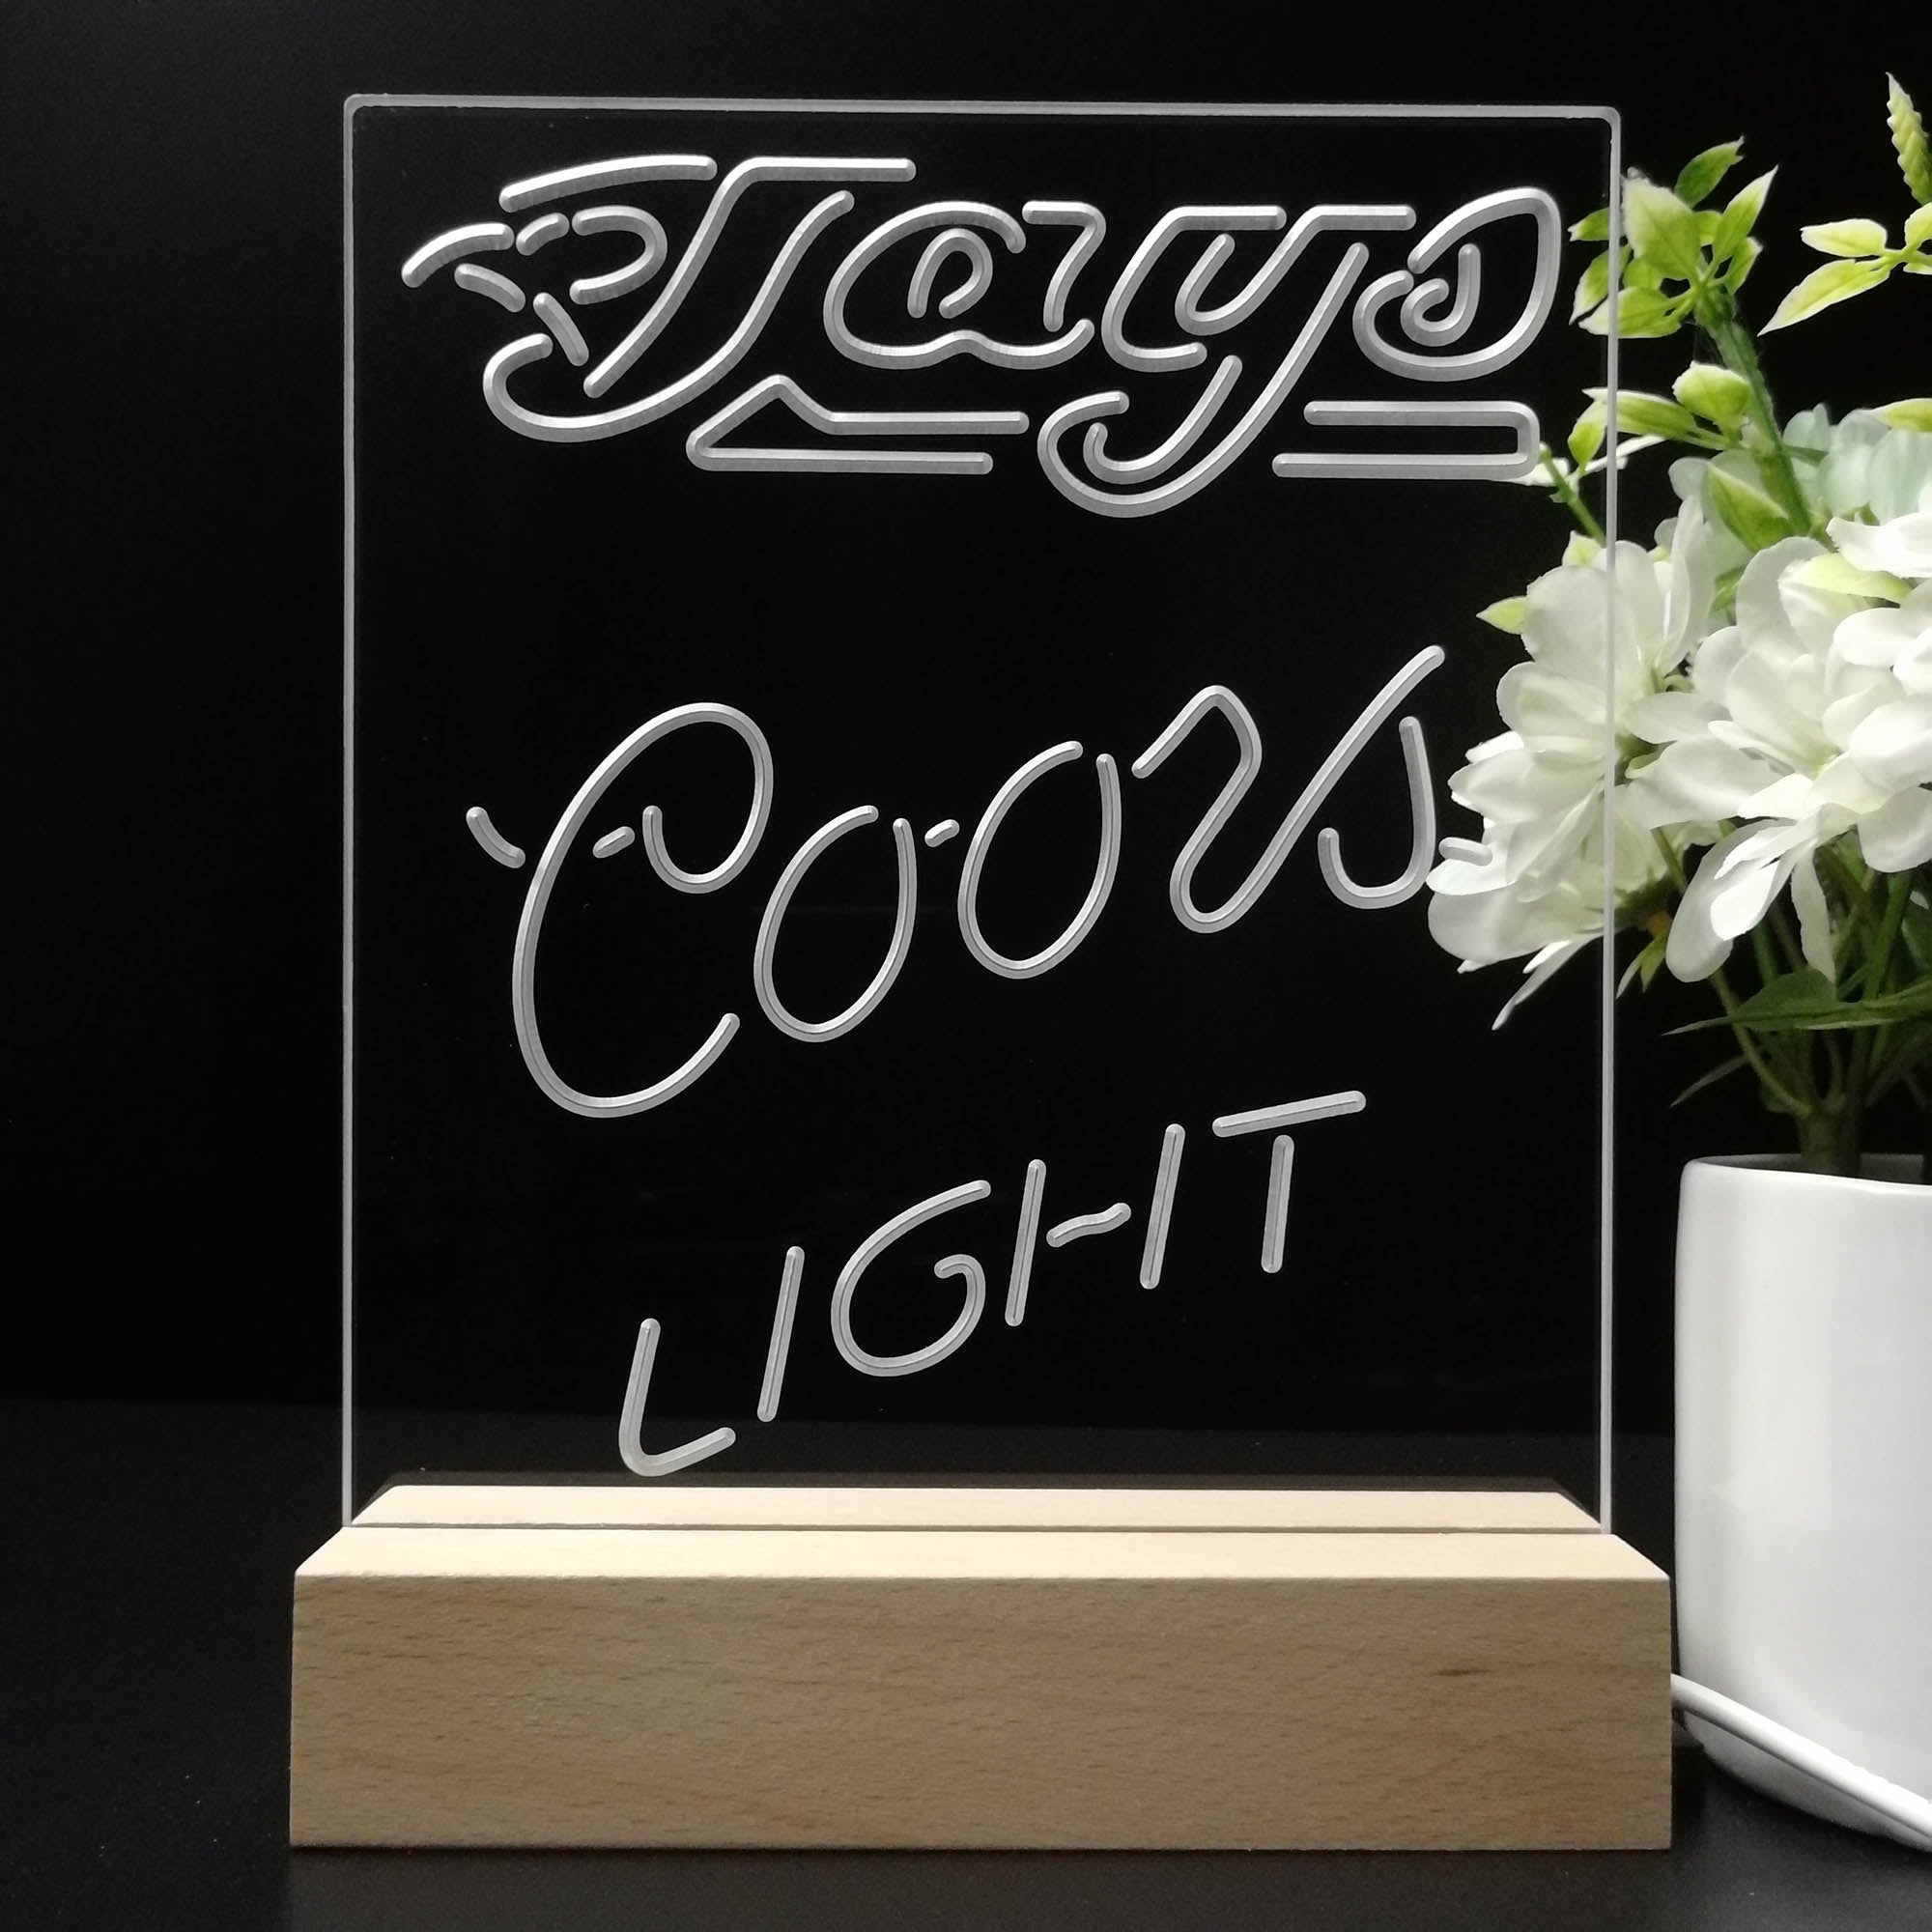 Toronto Blue Jays Coors Light Neon Sign Pub Bar Lamp